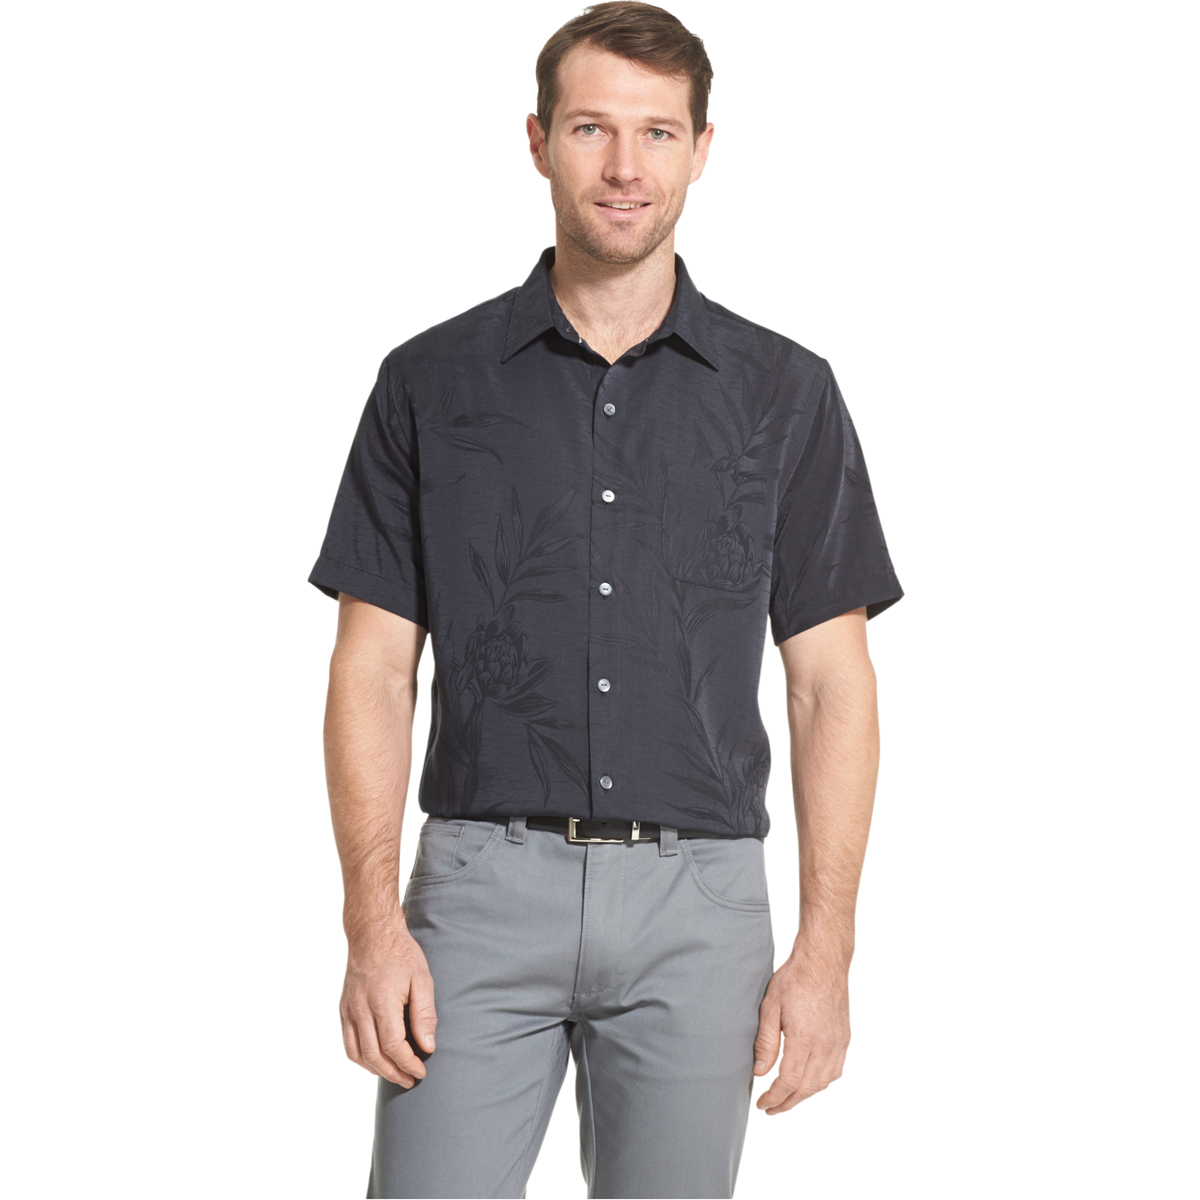 Van Heusen Men's Jaquard Short-Sleeve Shirt - Black, M